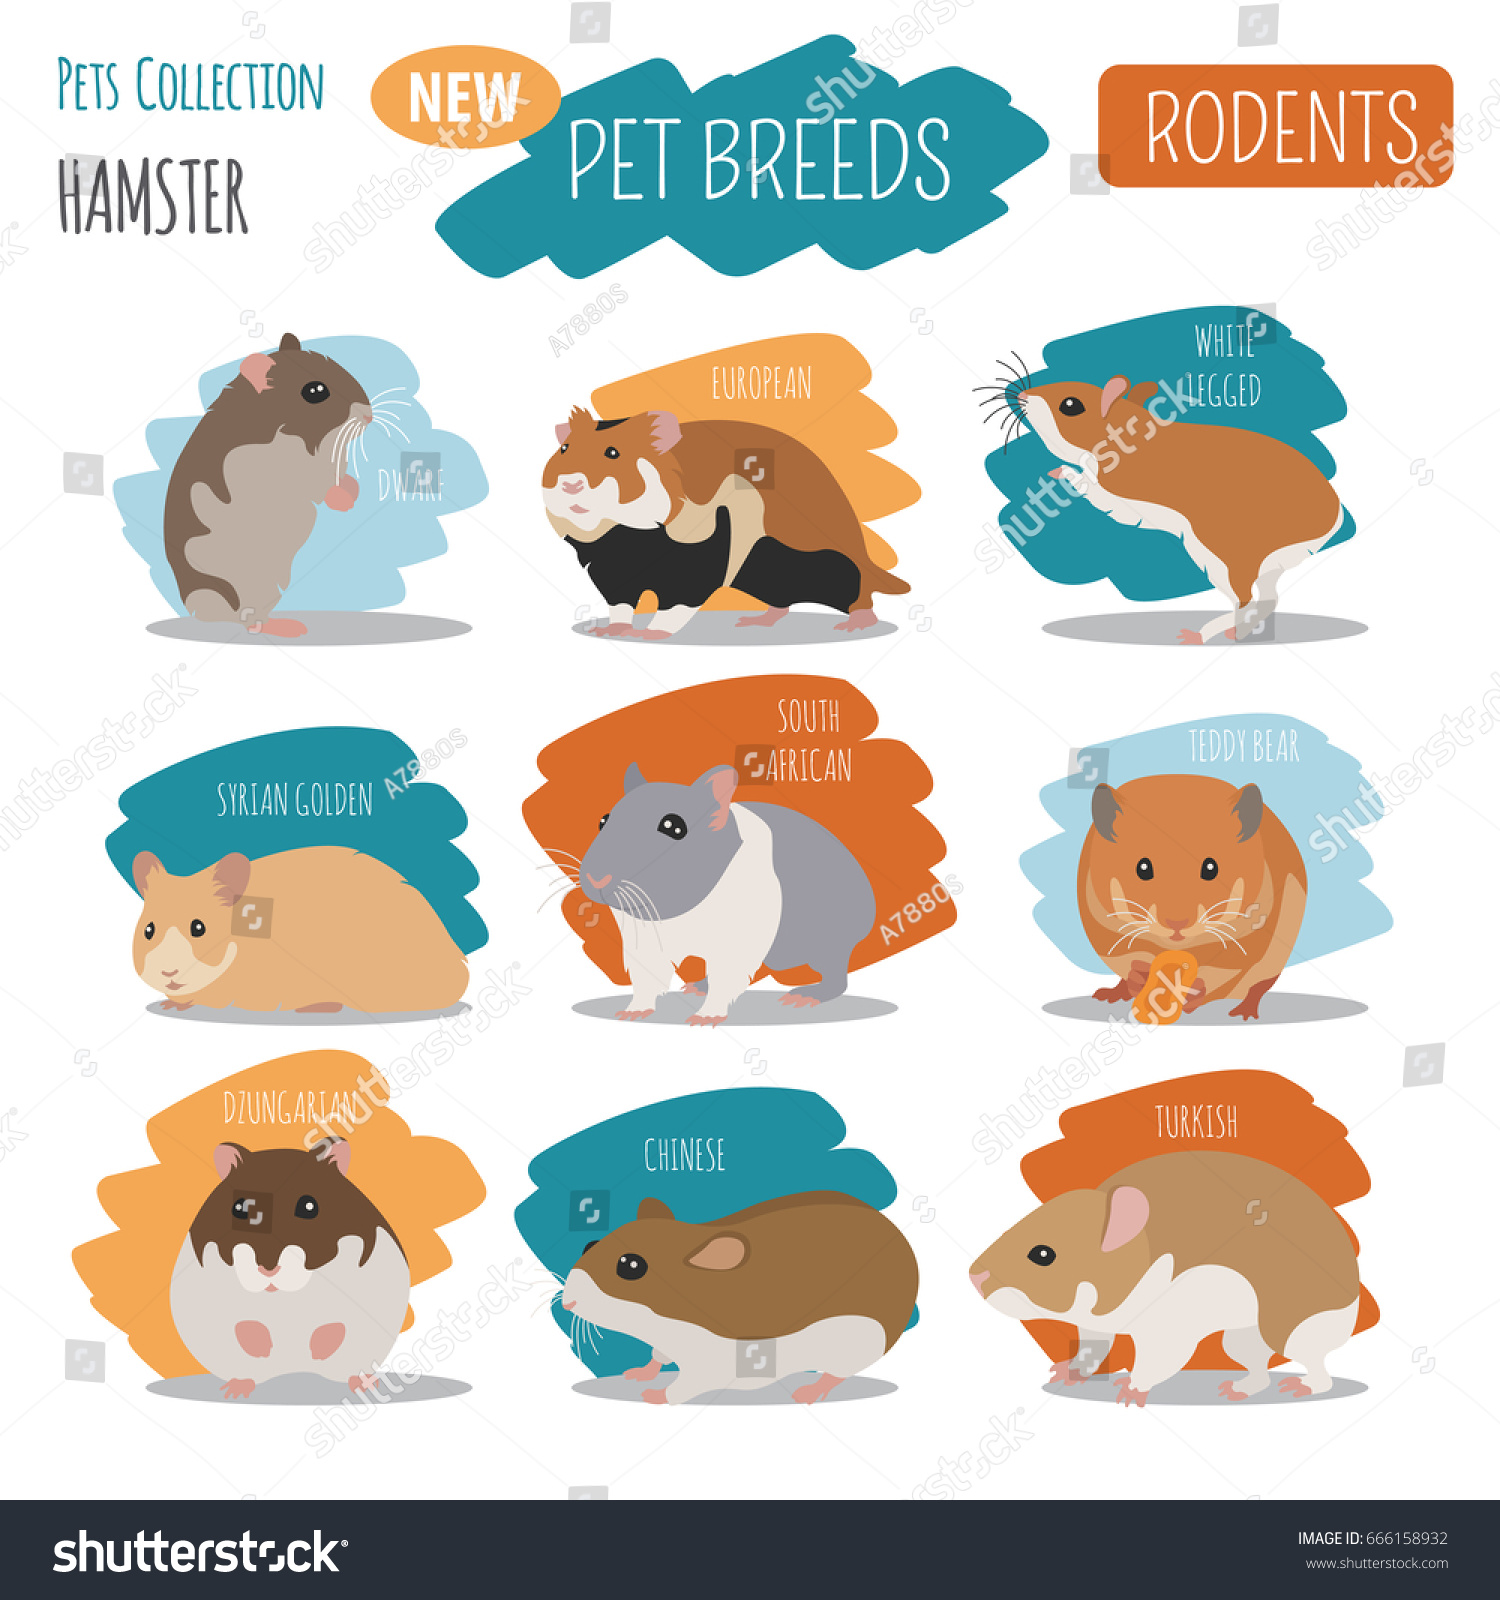 all hamster breeds